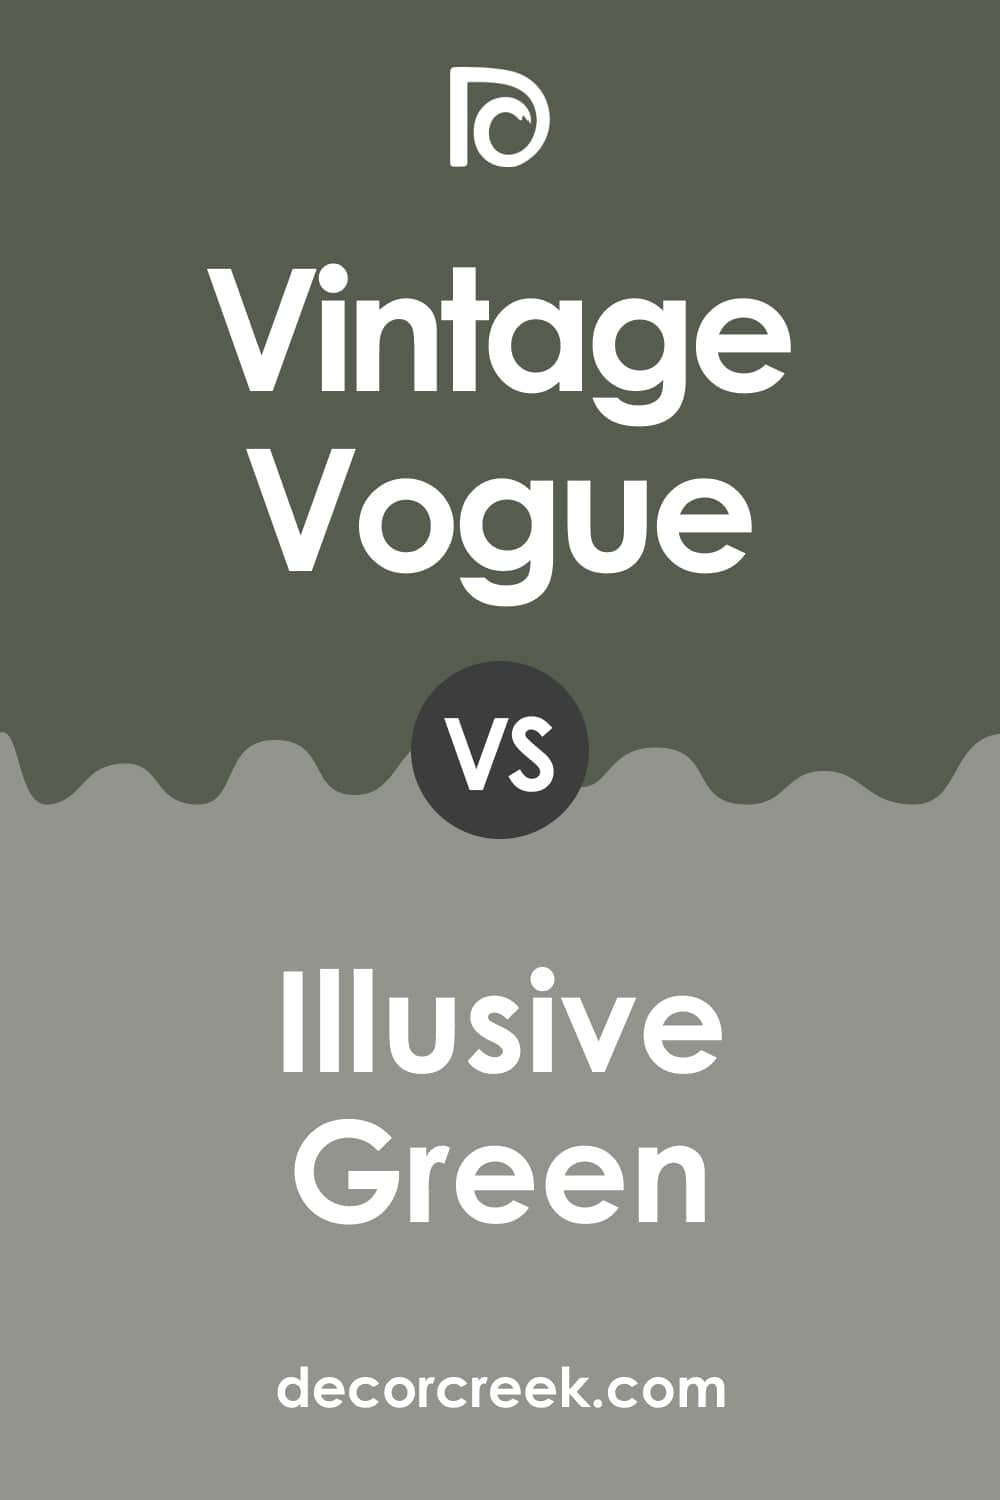 Vintage Vogue vs Illusive Green